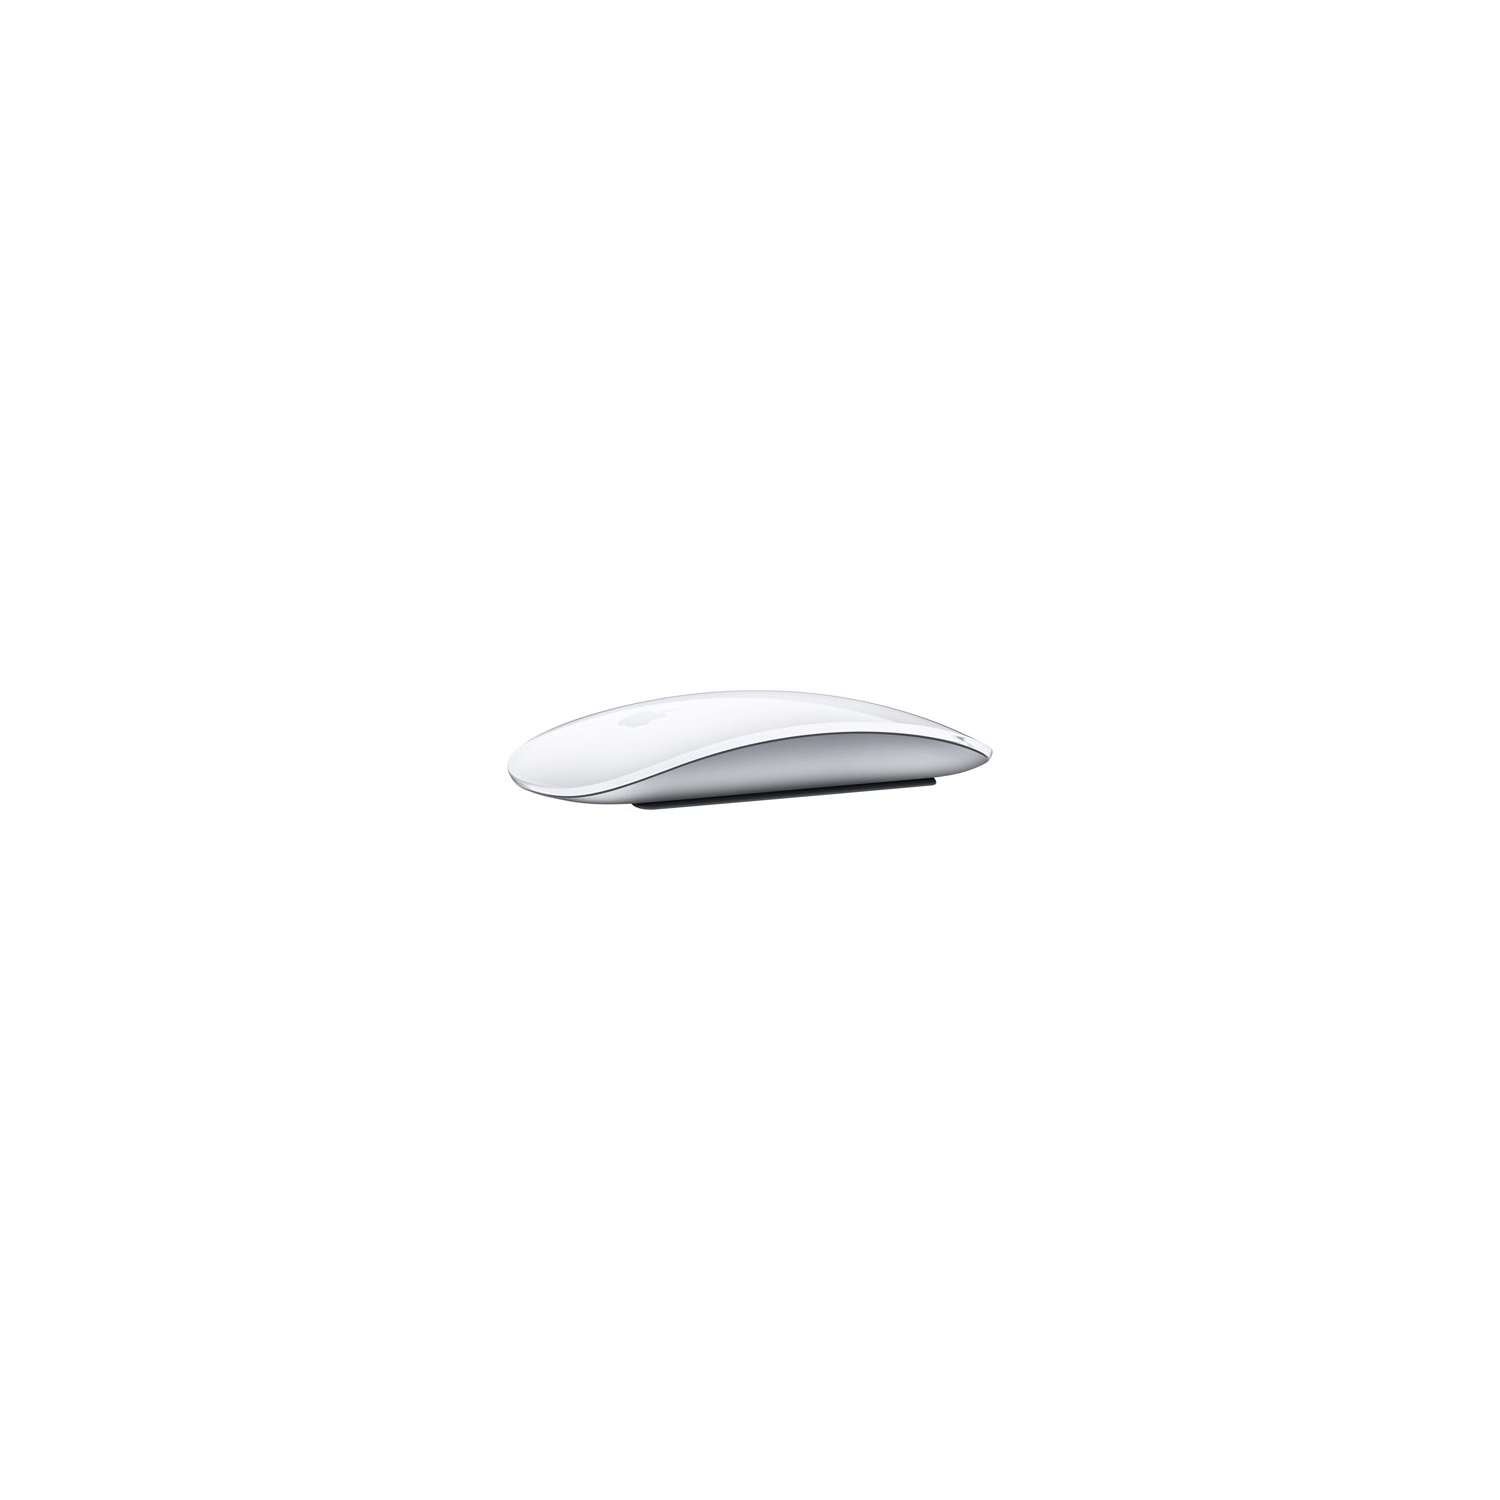 Apple Magic Mouse - White - Open Box